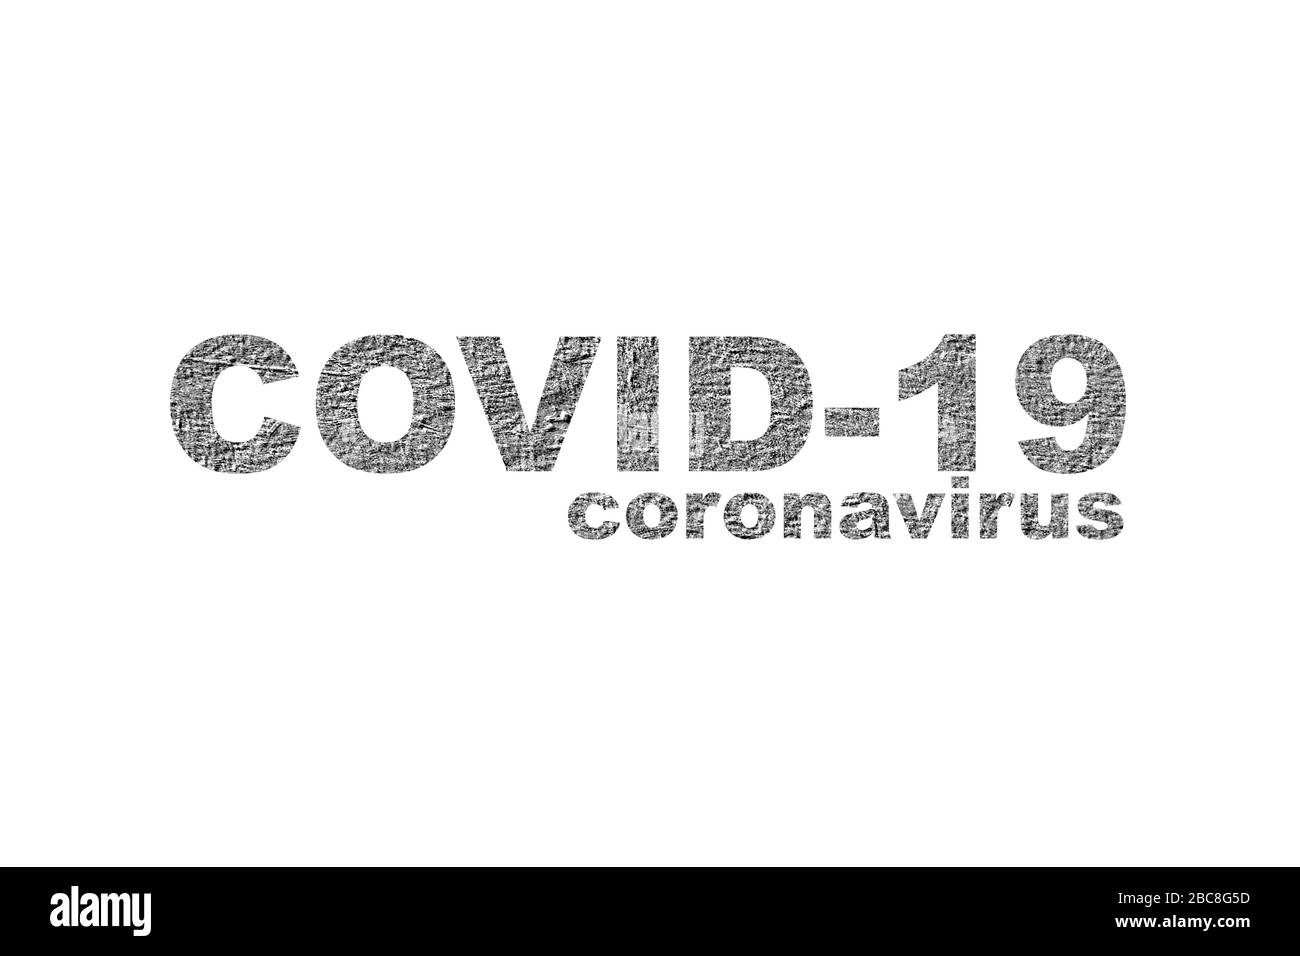 Coronavirus COVID-19 - 2019 Coronavirus Disease Stockfoto